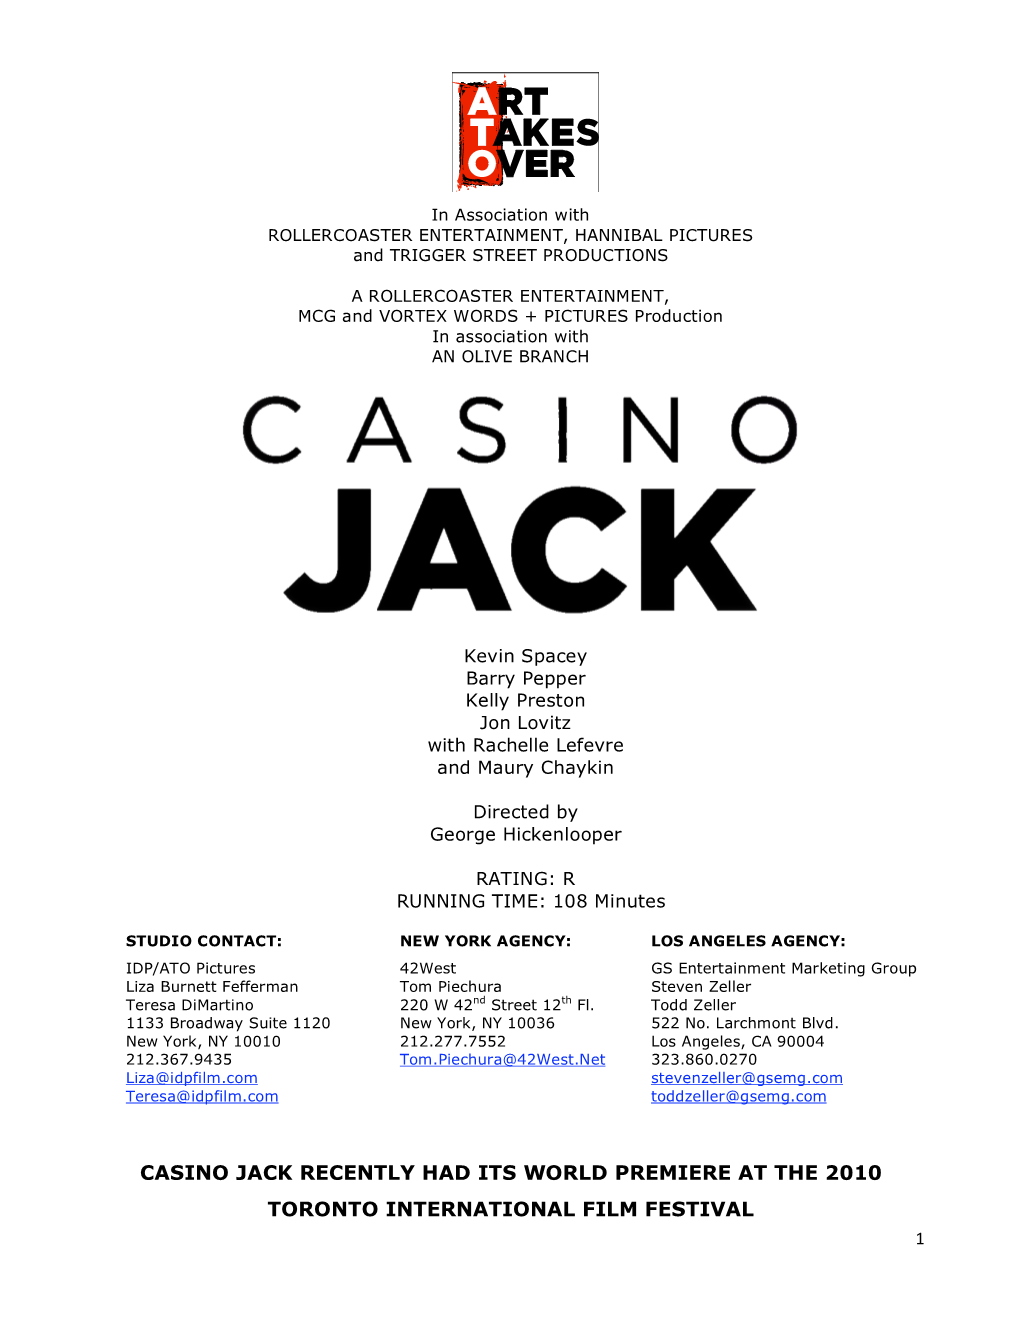 Casino Jack Recently Had Its World Premiere at the 2010 Toronto International Film Festival 1